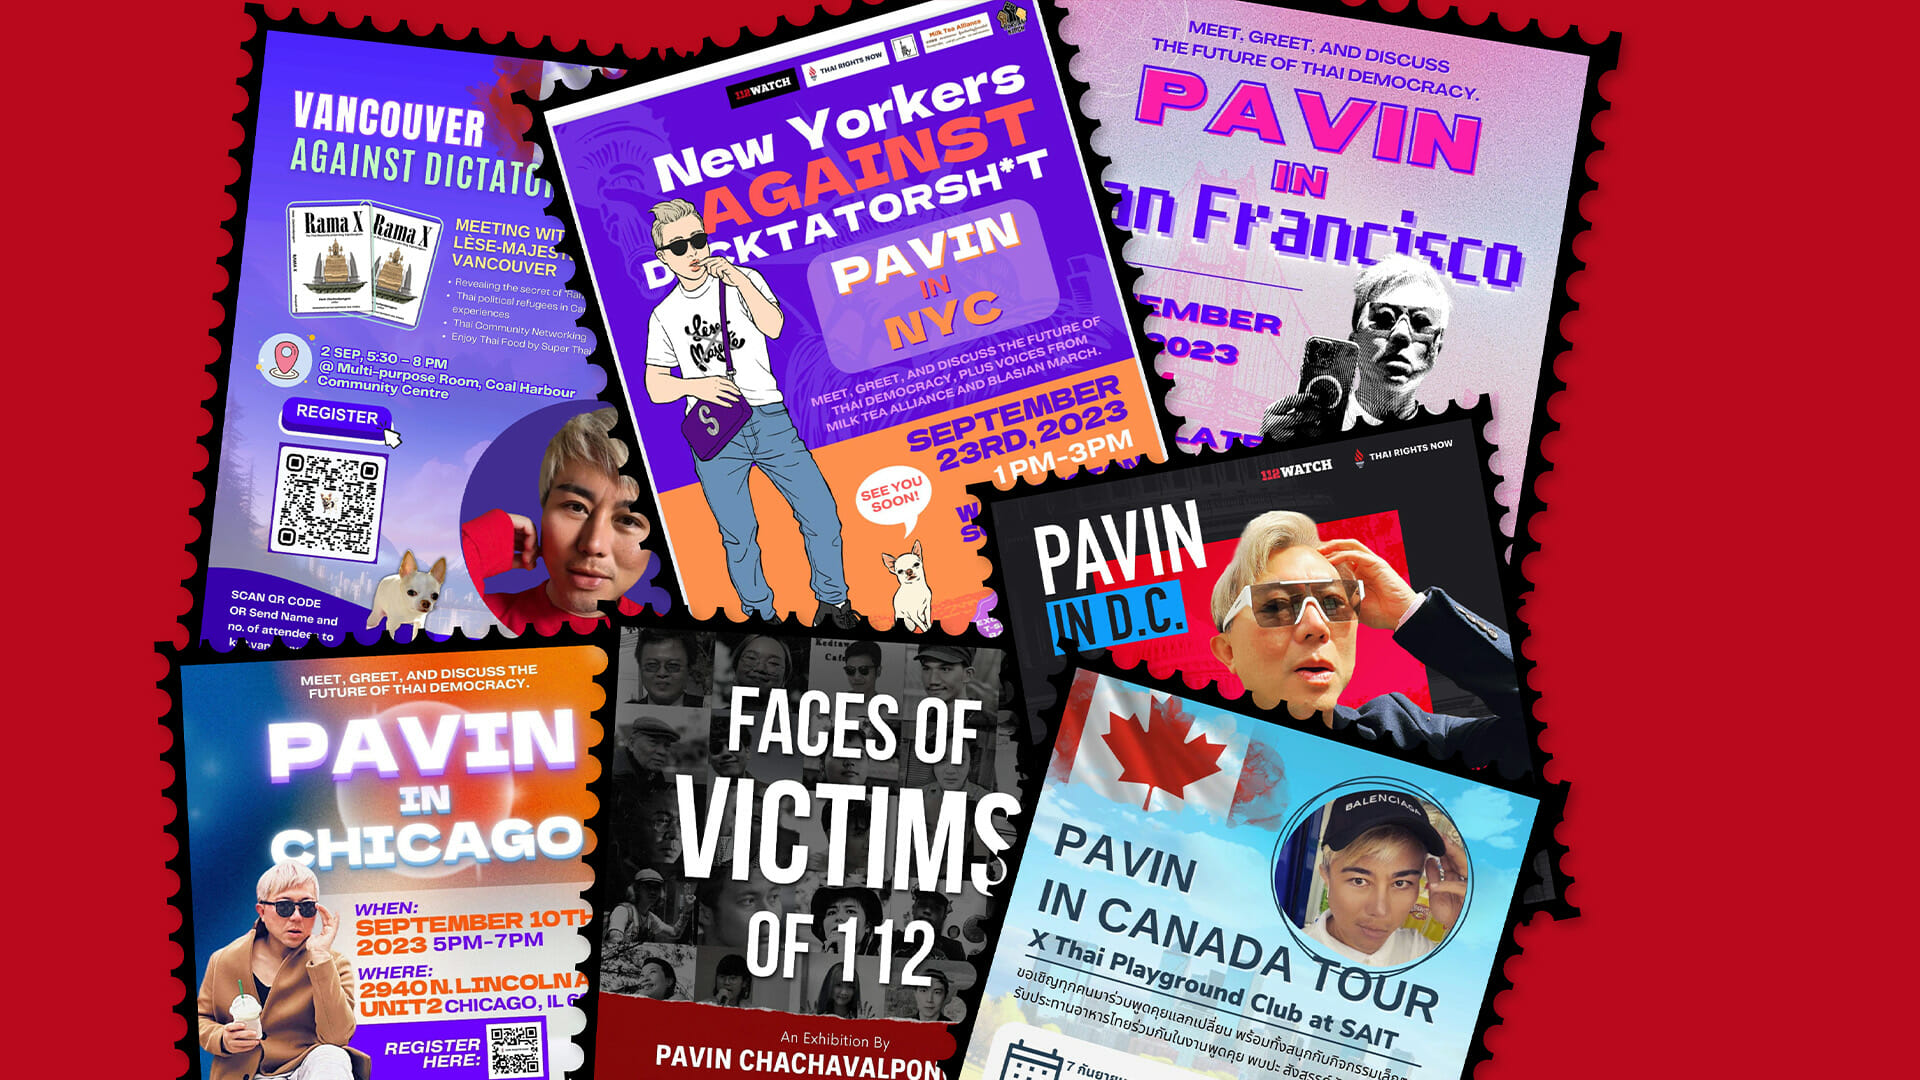 Pavin North America Tour